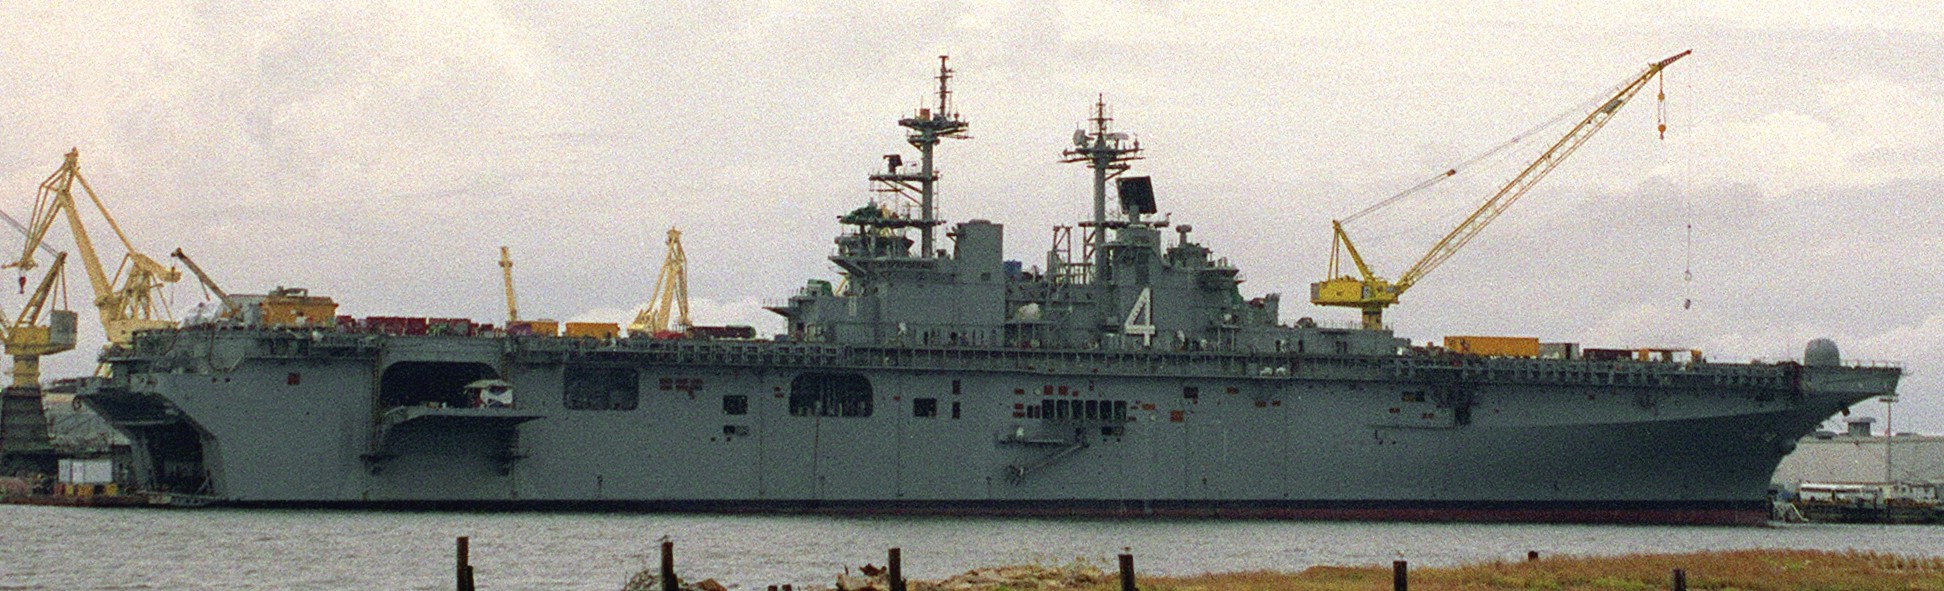 lhd-4 uss boxer wasp class amphibious assault ship dock landing us navy ingalls pascagoula mississippi 02